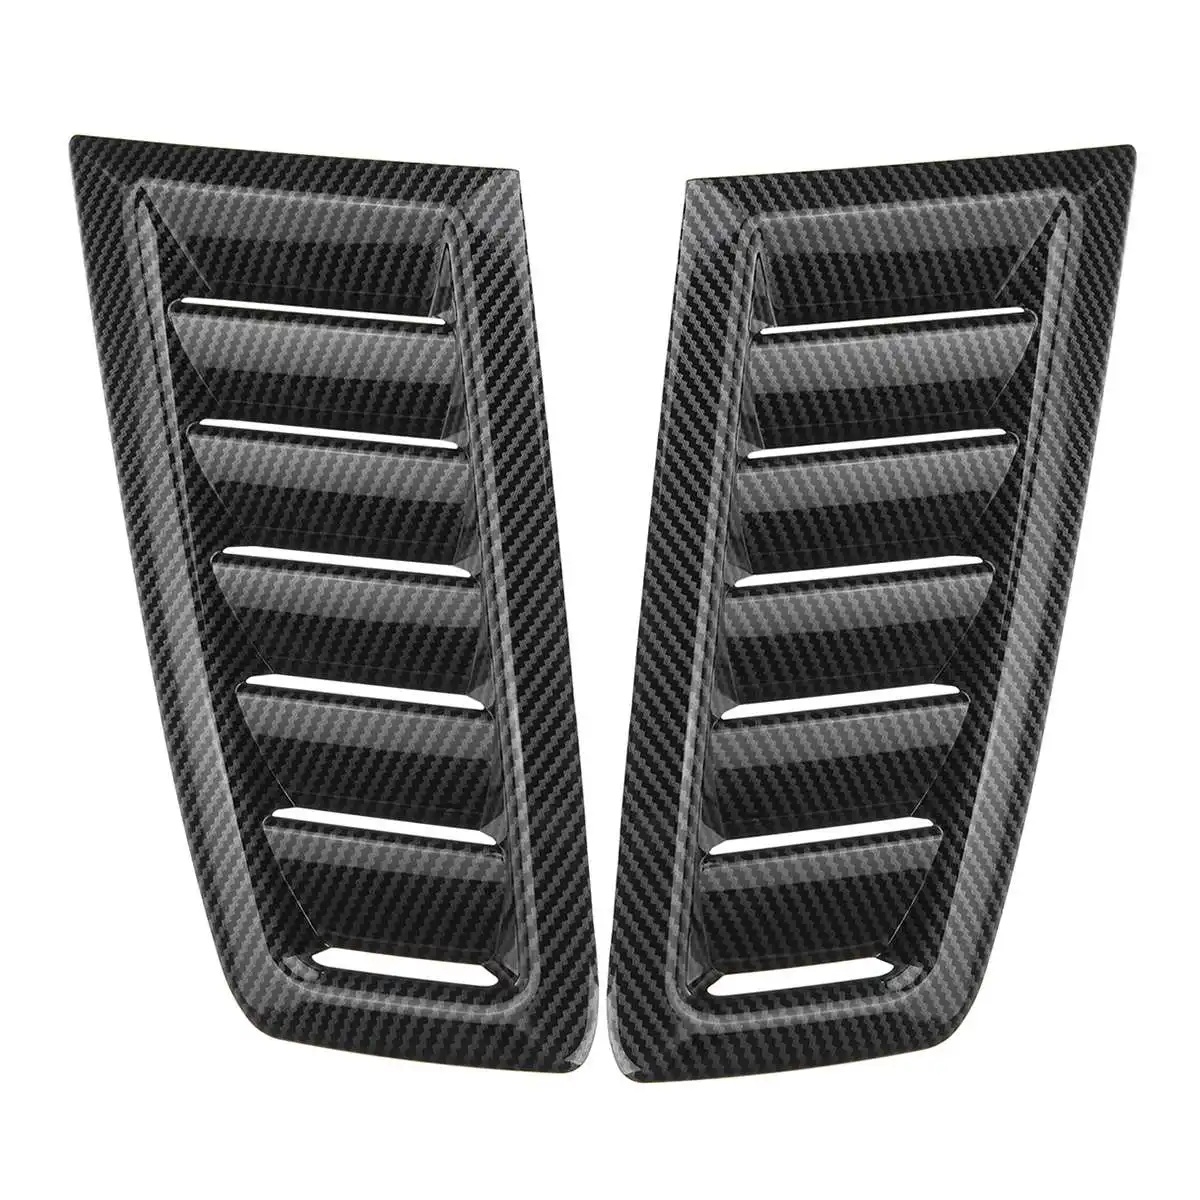 Pair Universal Car Front Bonnet Vents Hood Air Flow Intake Decorative Scoop Cover For Ford Focus MK2 BMW Audi Benz Black Carbon